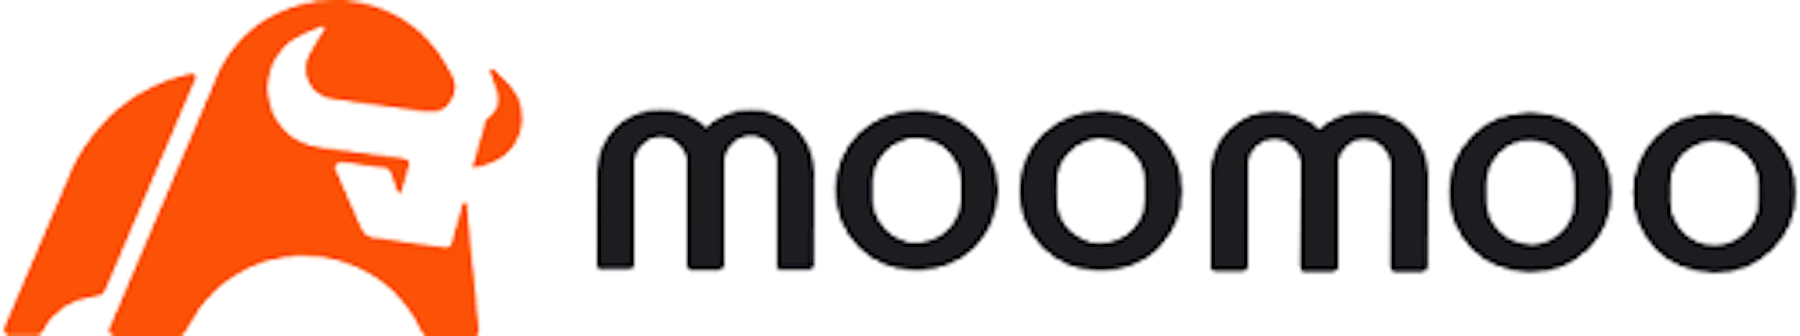 Moomoo Banner Width